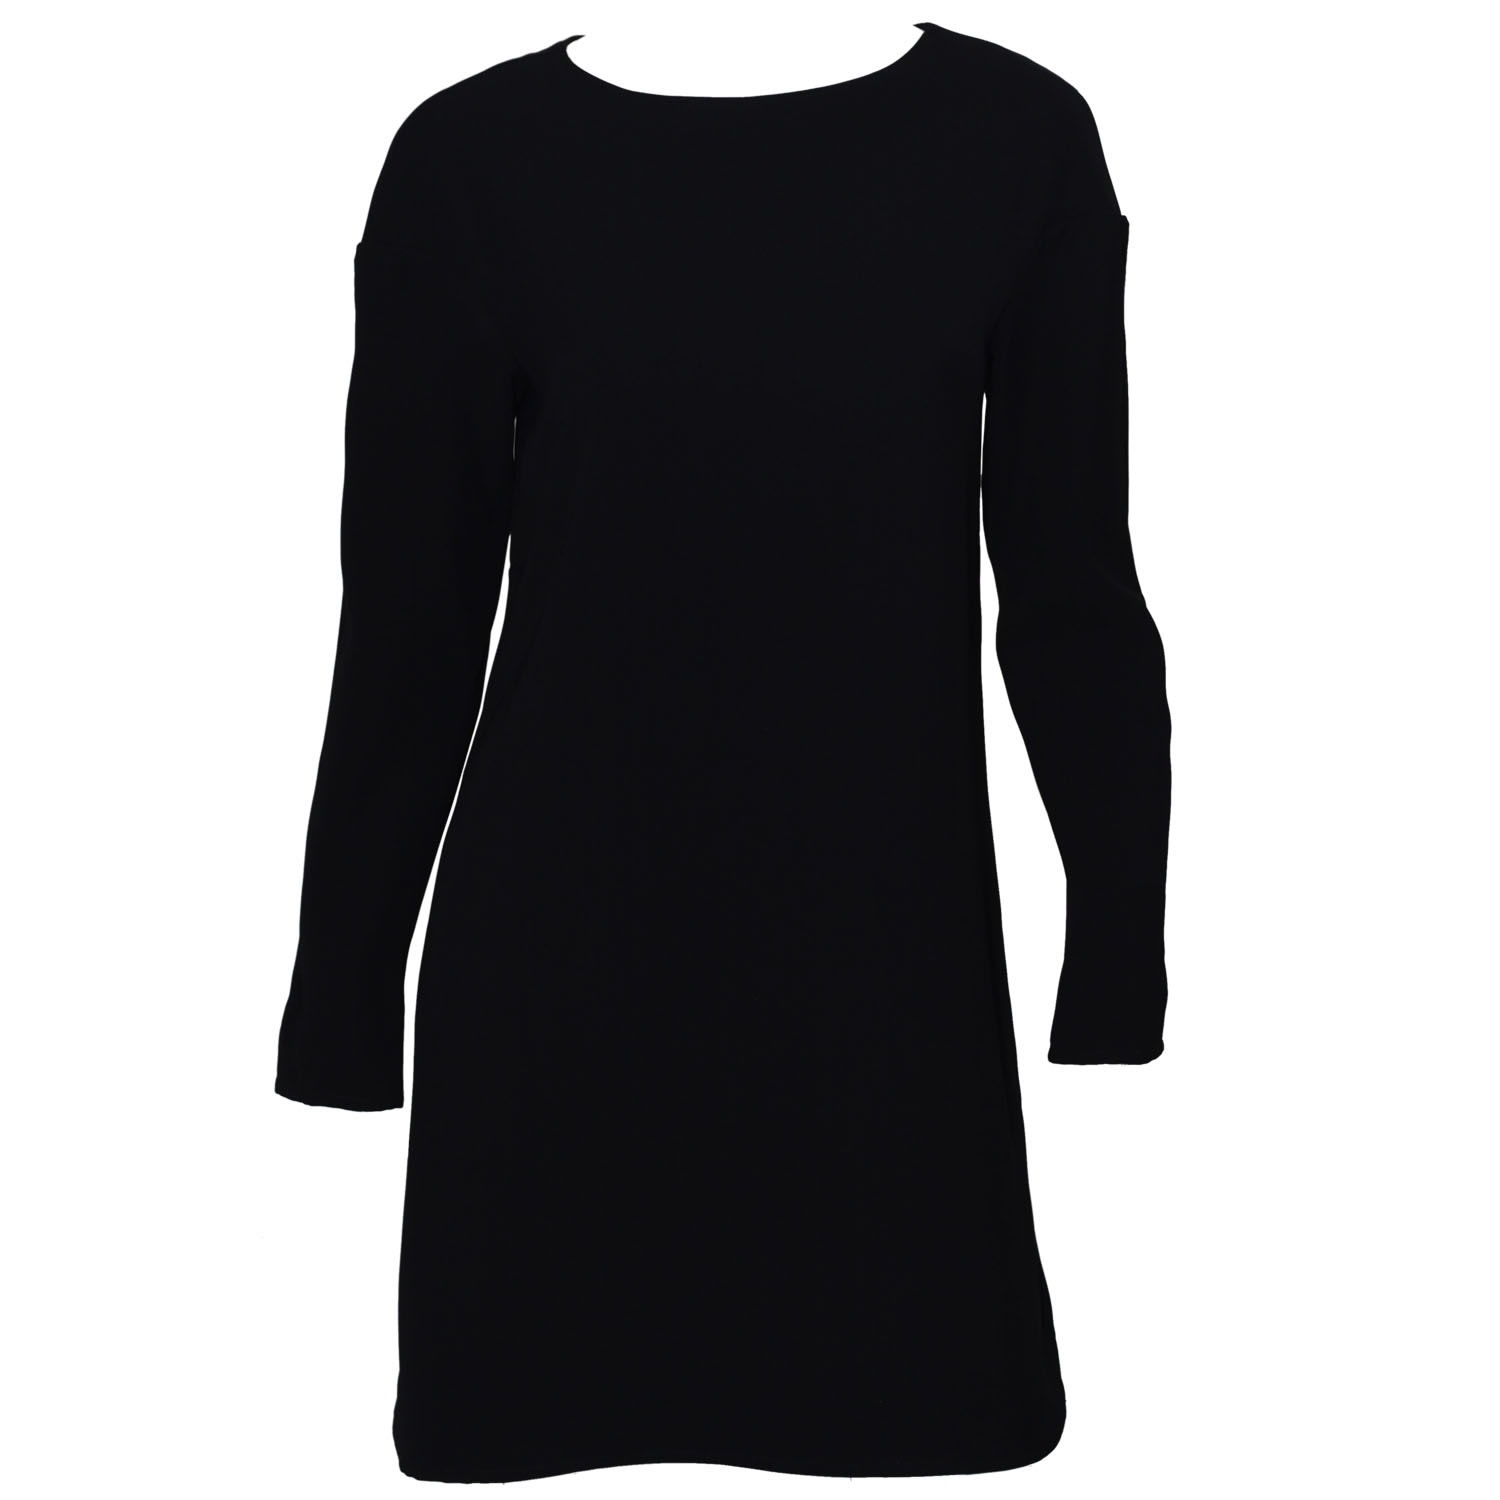 Snider Women's Black Ciro's Dress